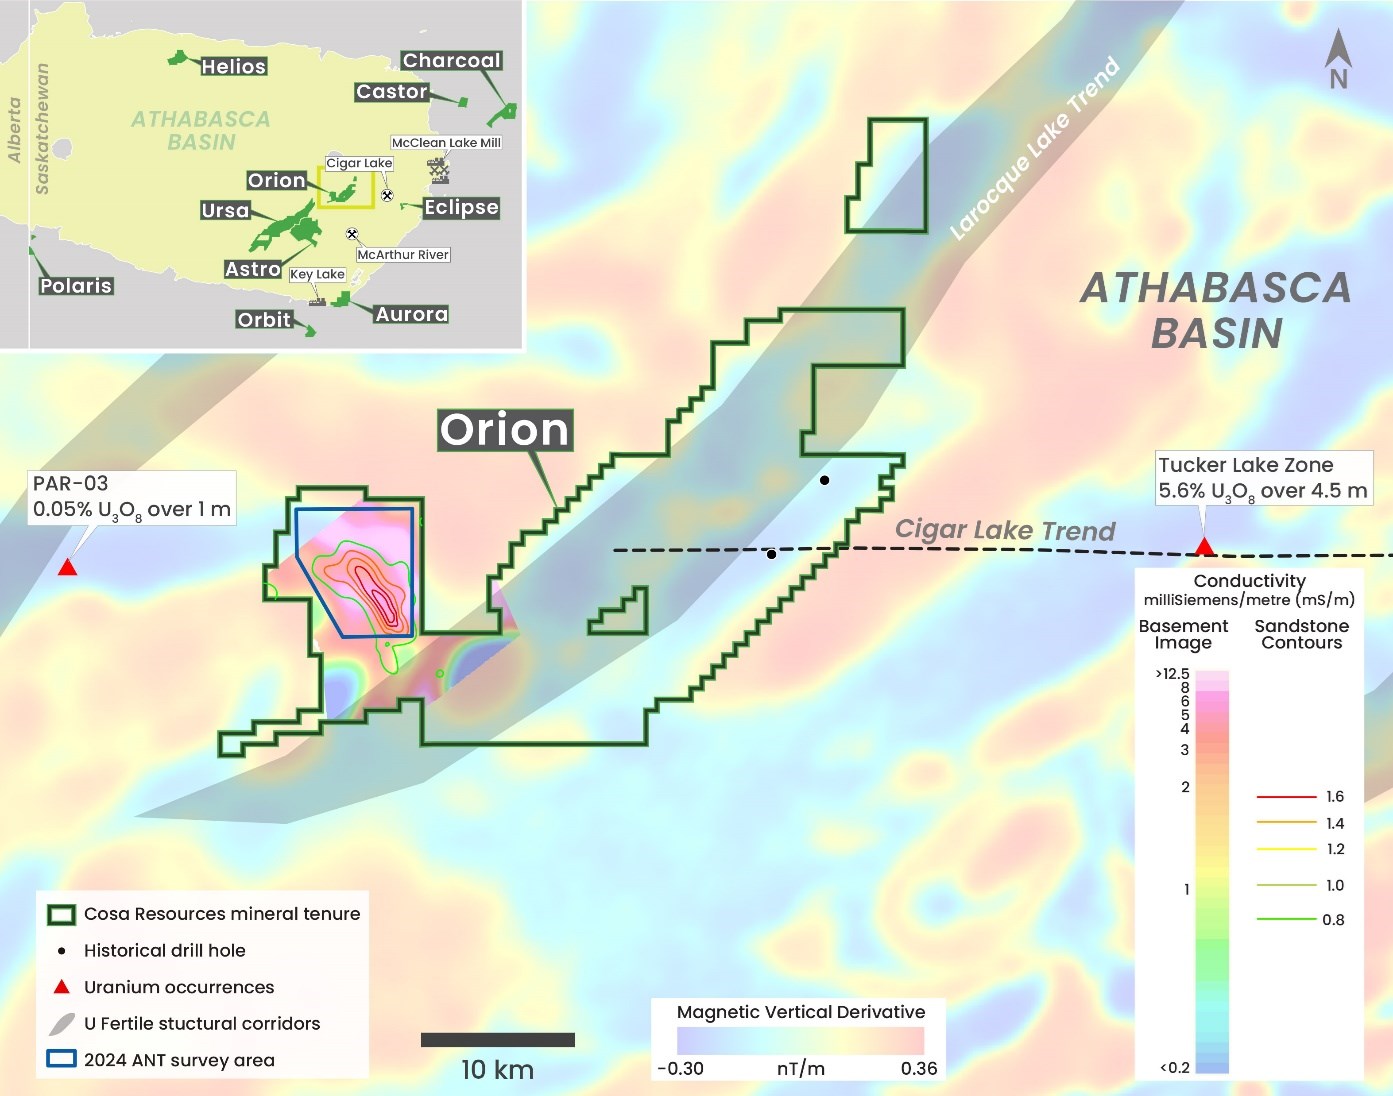 Orion ANT Survey Area Cosa Resources Announces Summer Exploration Plans for Athabasca Basin Uranium Projects